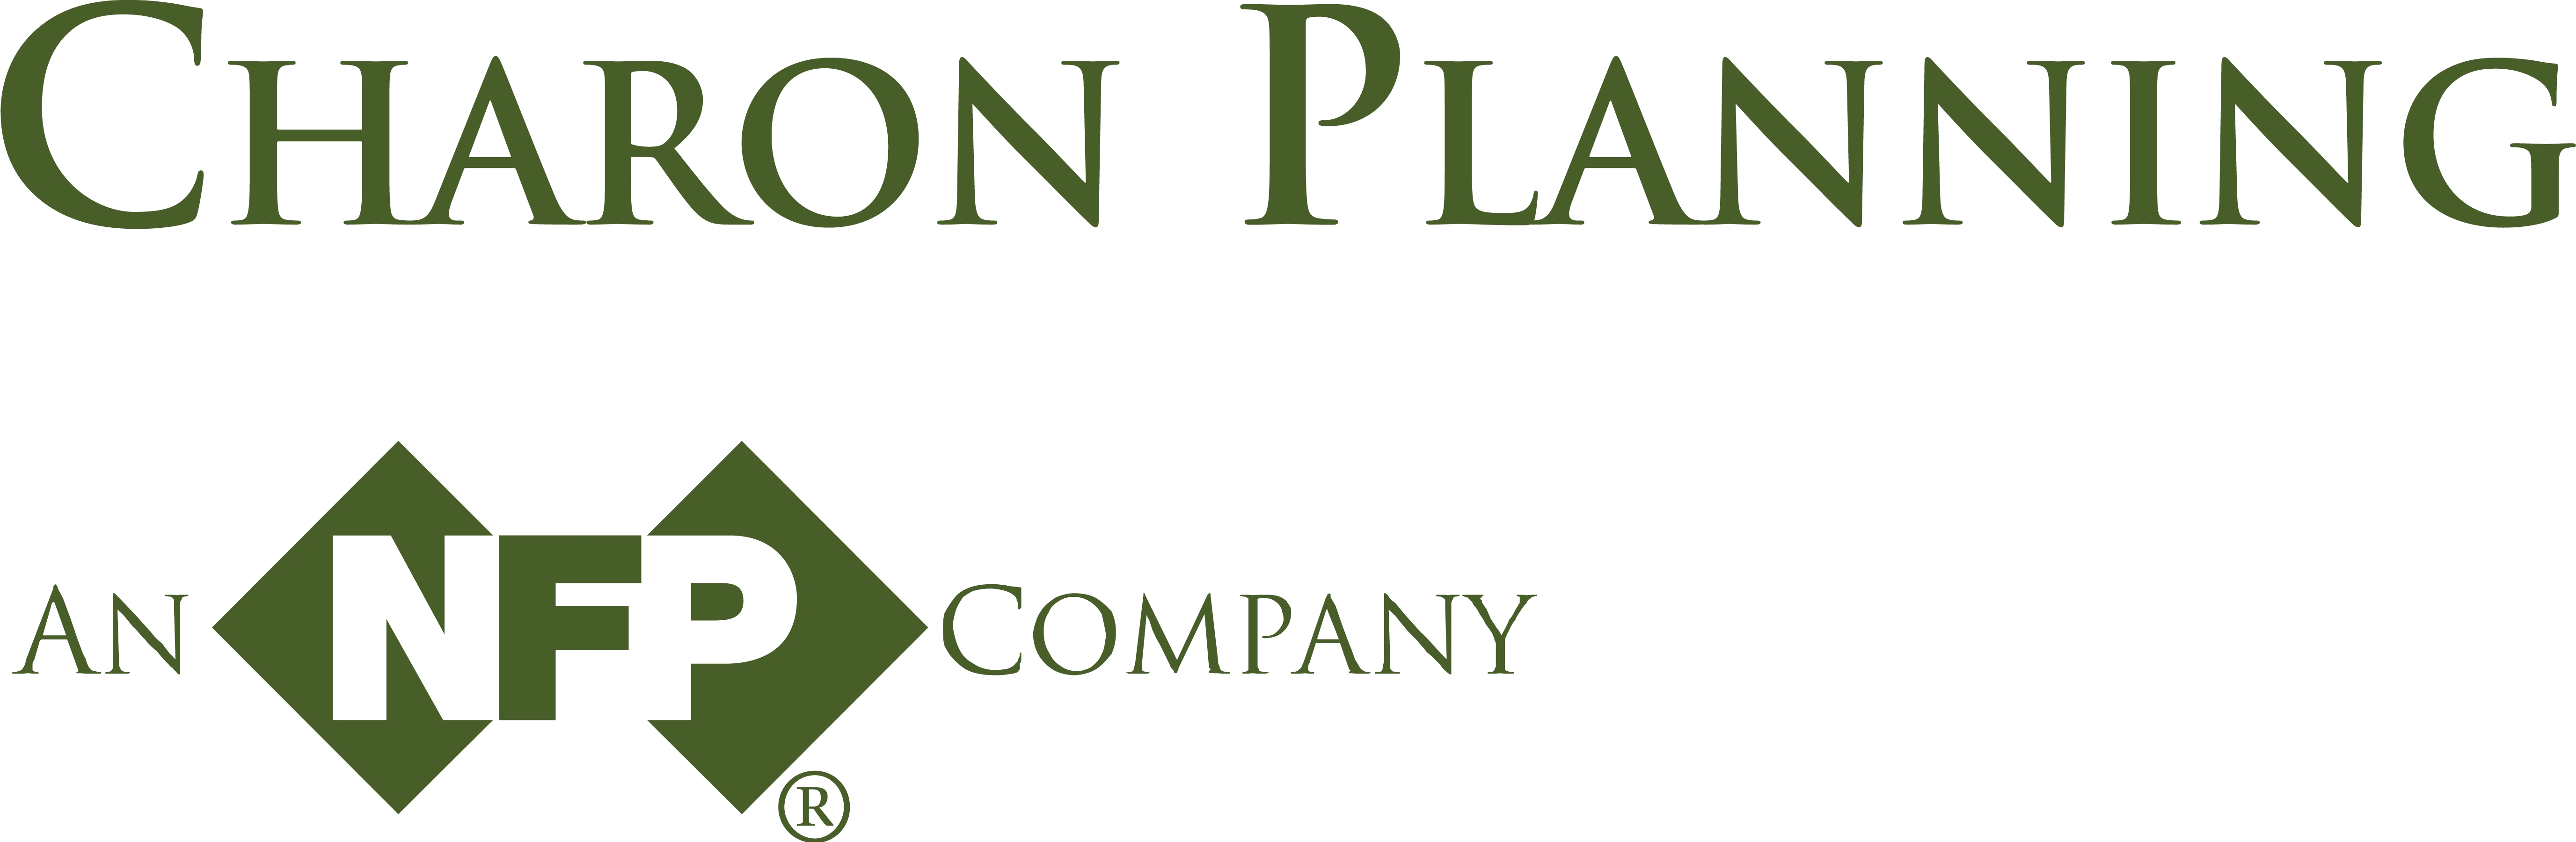 Charon Planning Corporation Company Logo